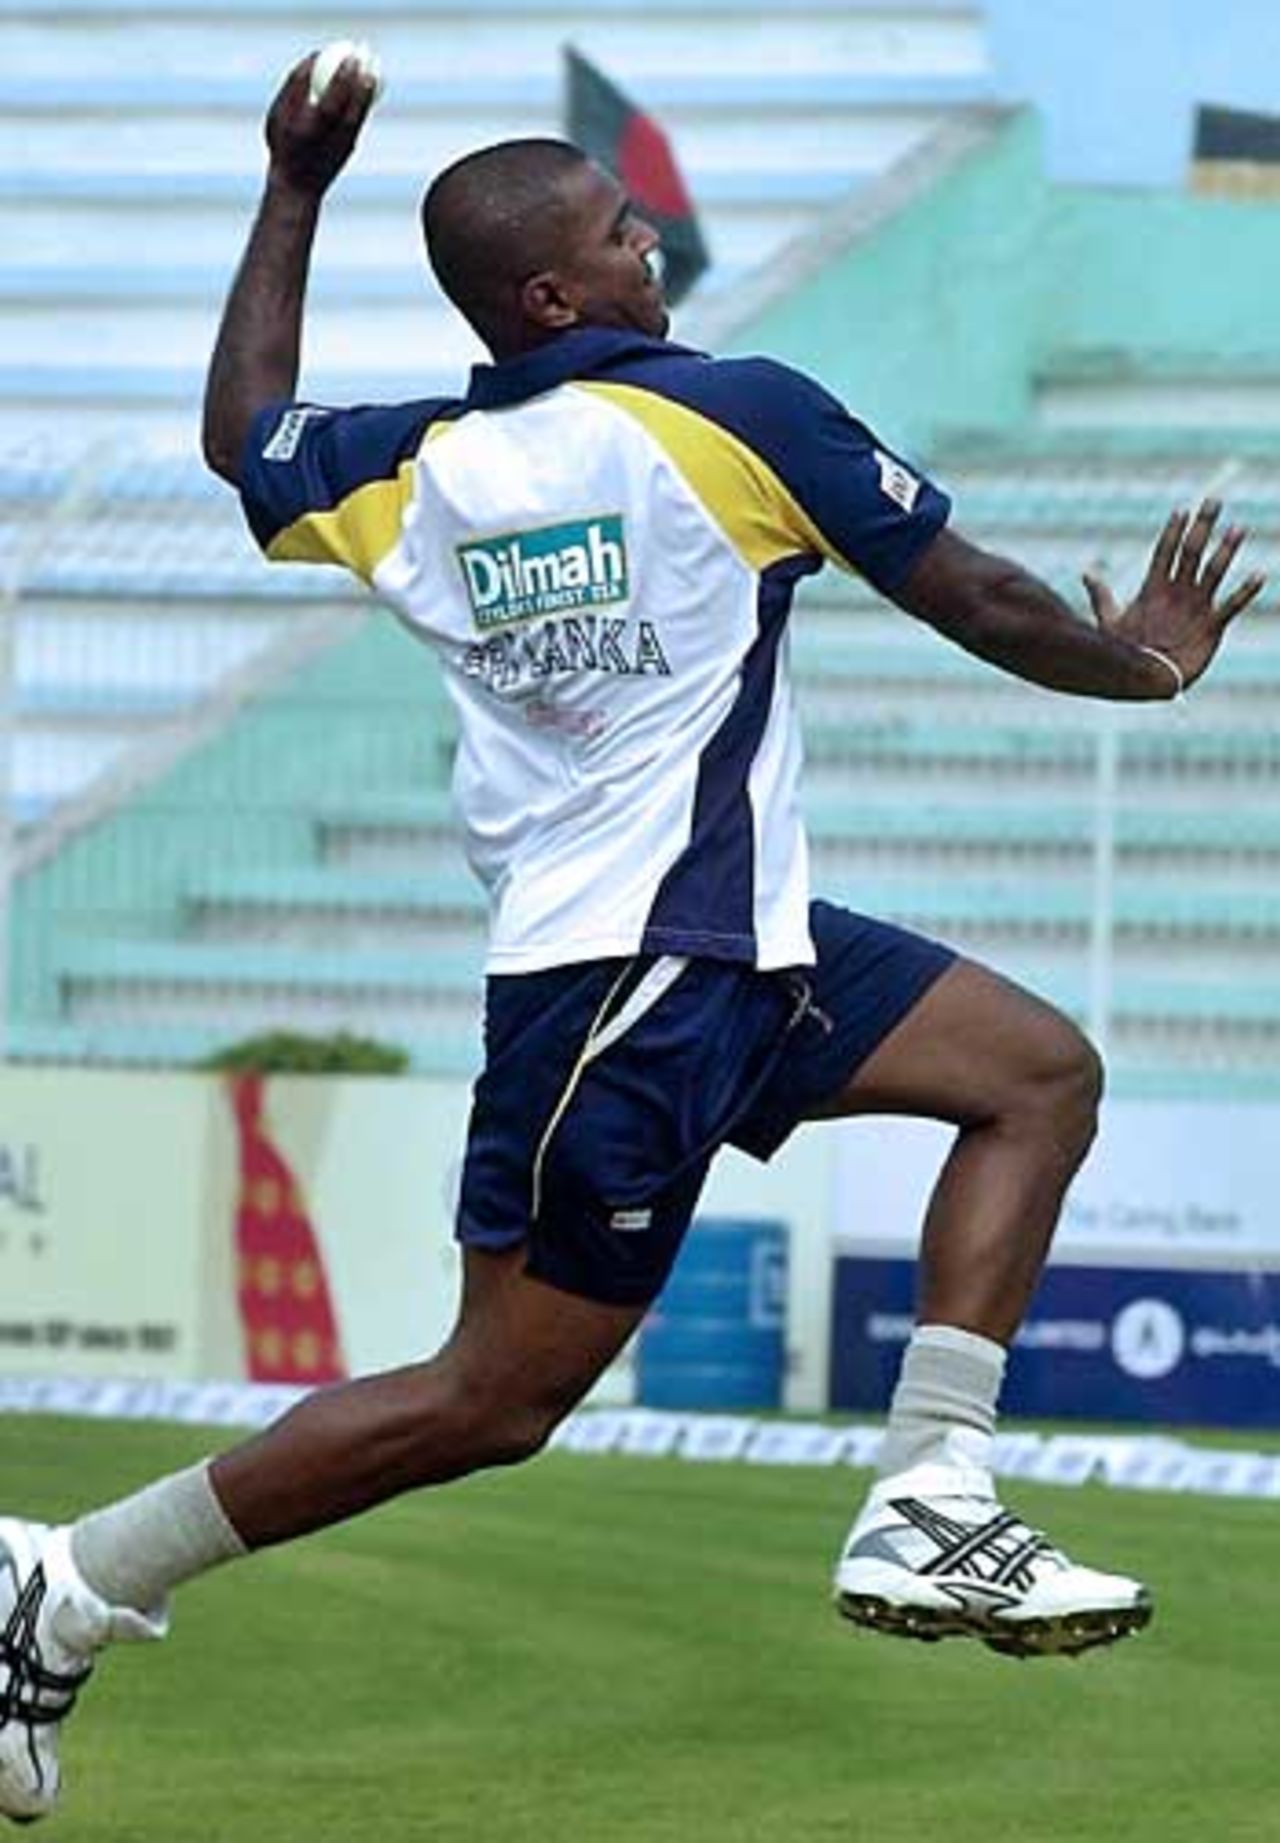 Ruchira Perera flies into bowl during a net session, Sri Lanka in Bangladesh, Bogra, February 21, 2006